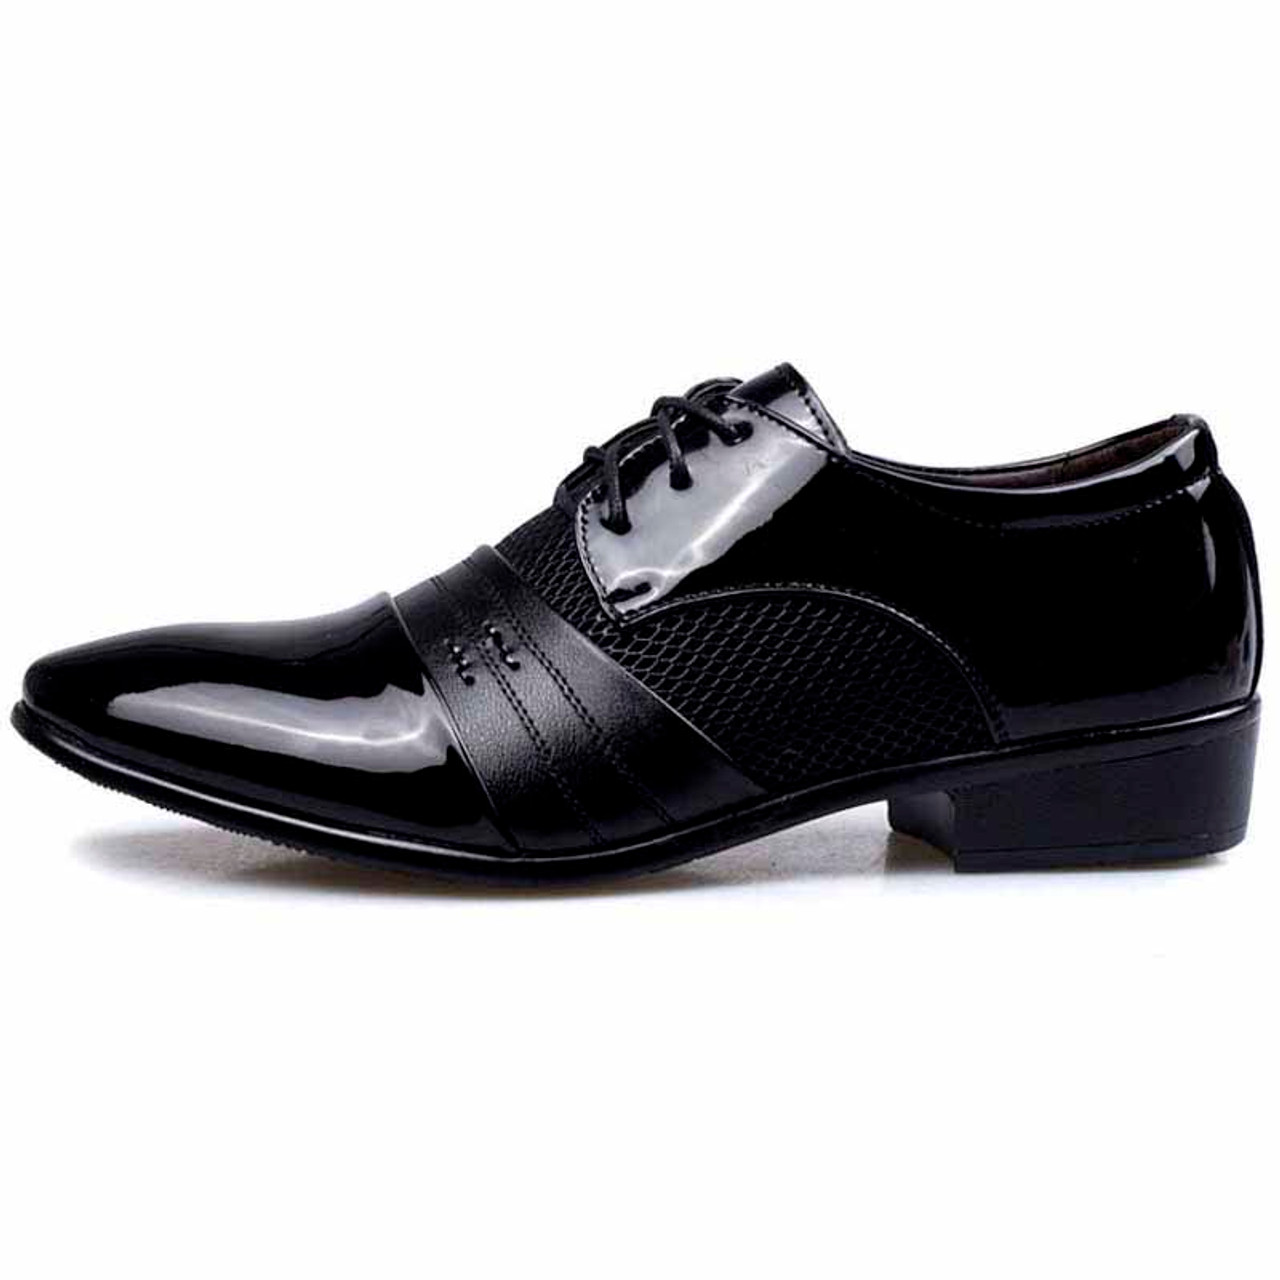 Black check pattern leather derby dress shoe | Mens dress shoes online ...